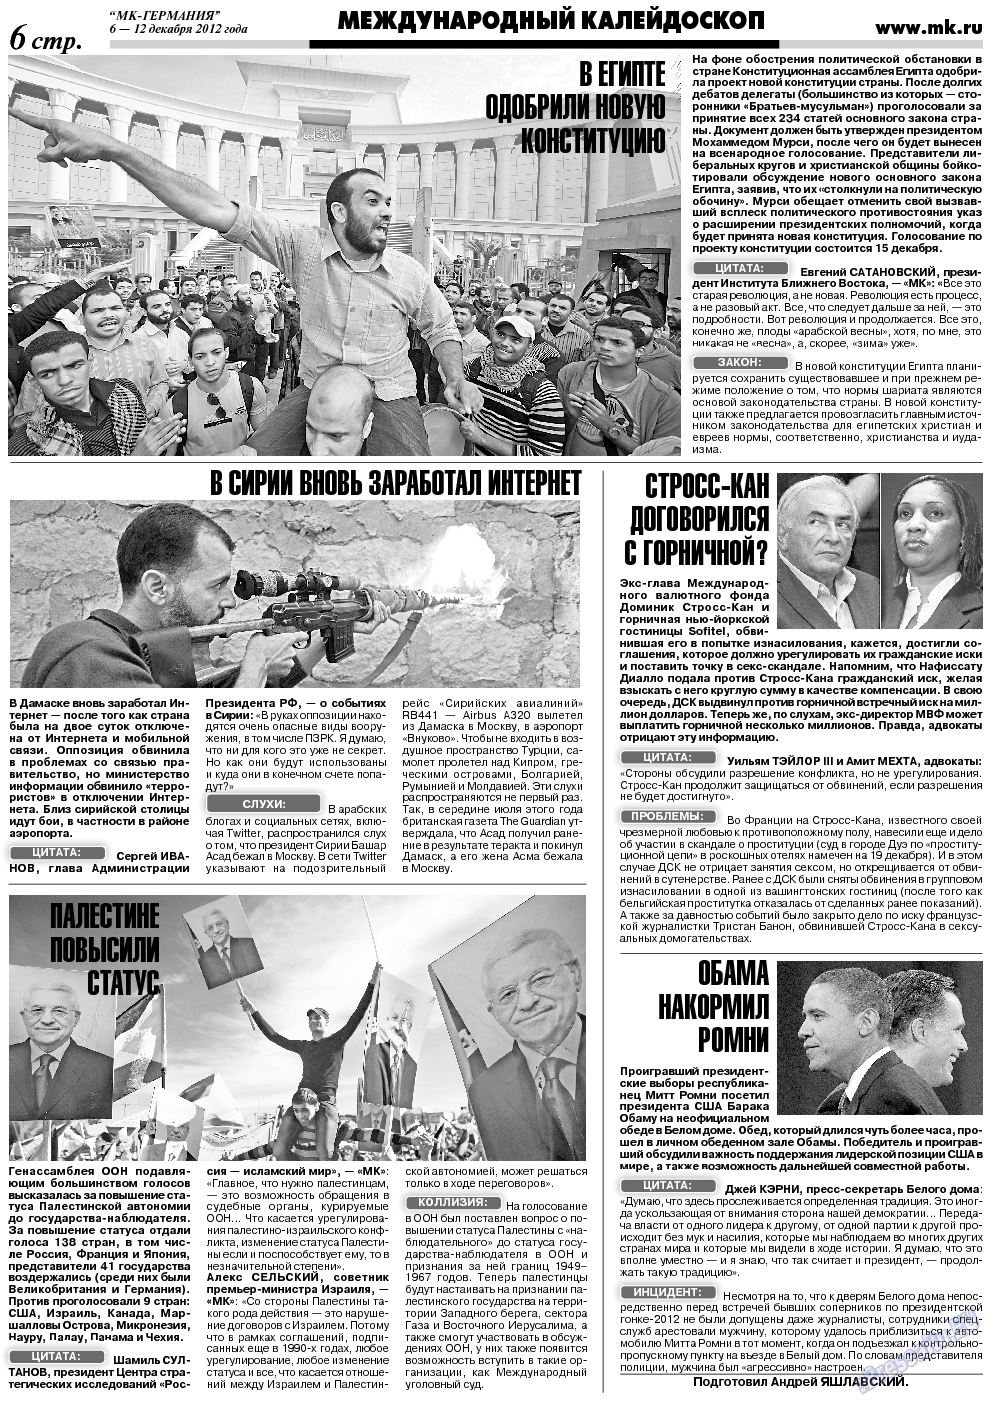 МК-Германия, газета. 2012 №49 стр.6